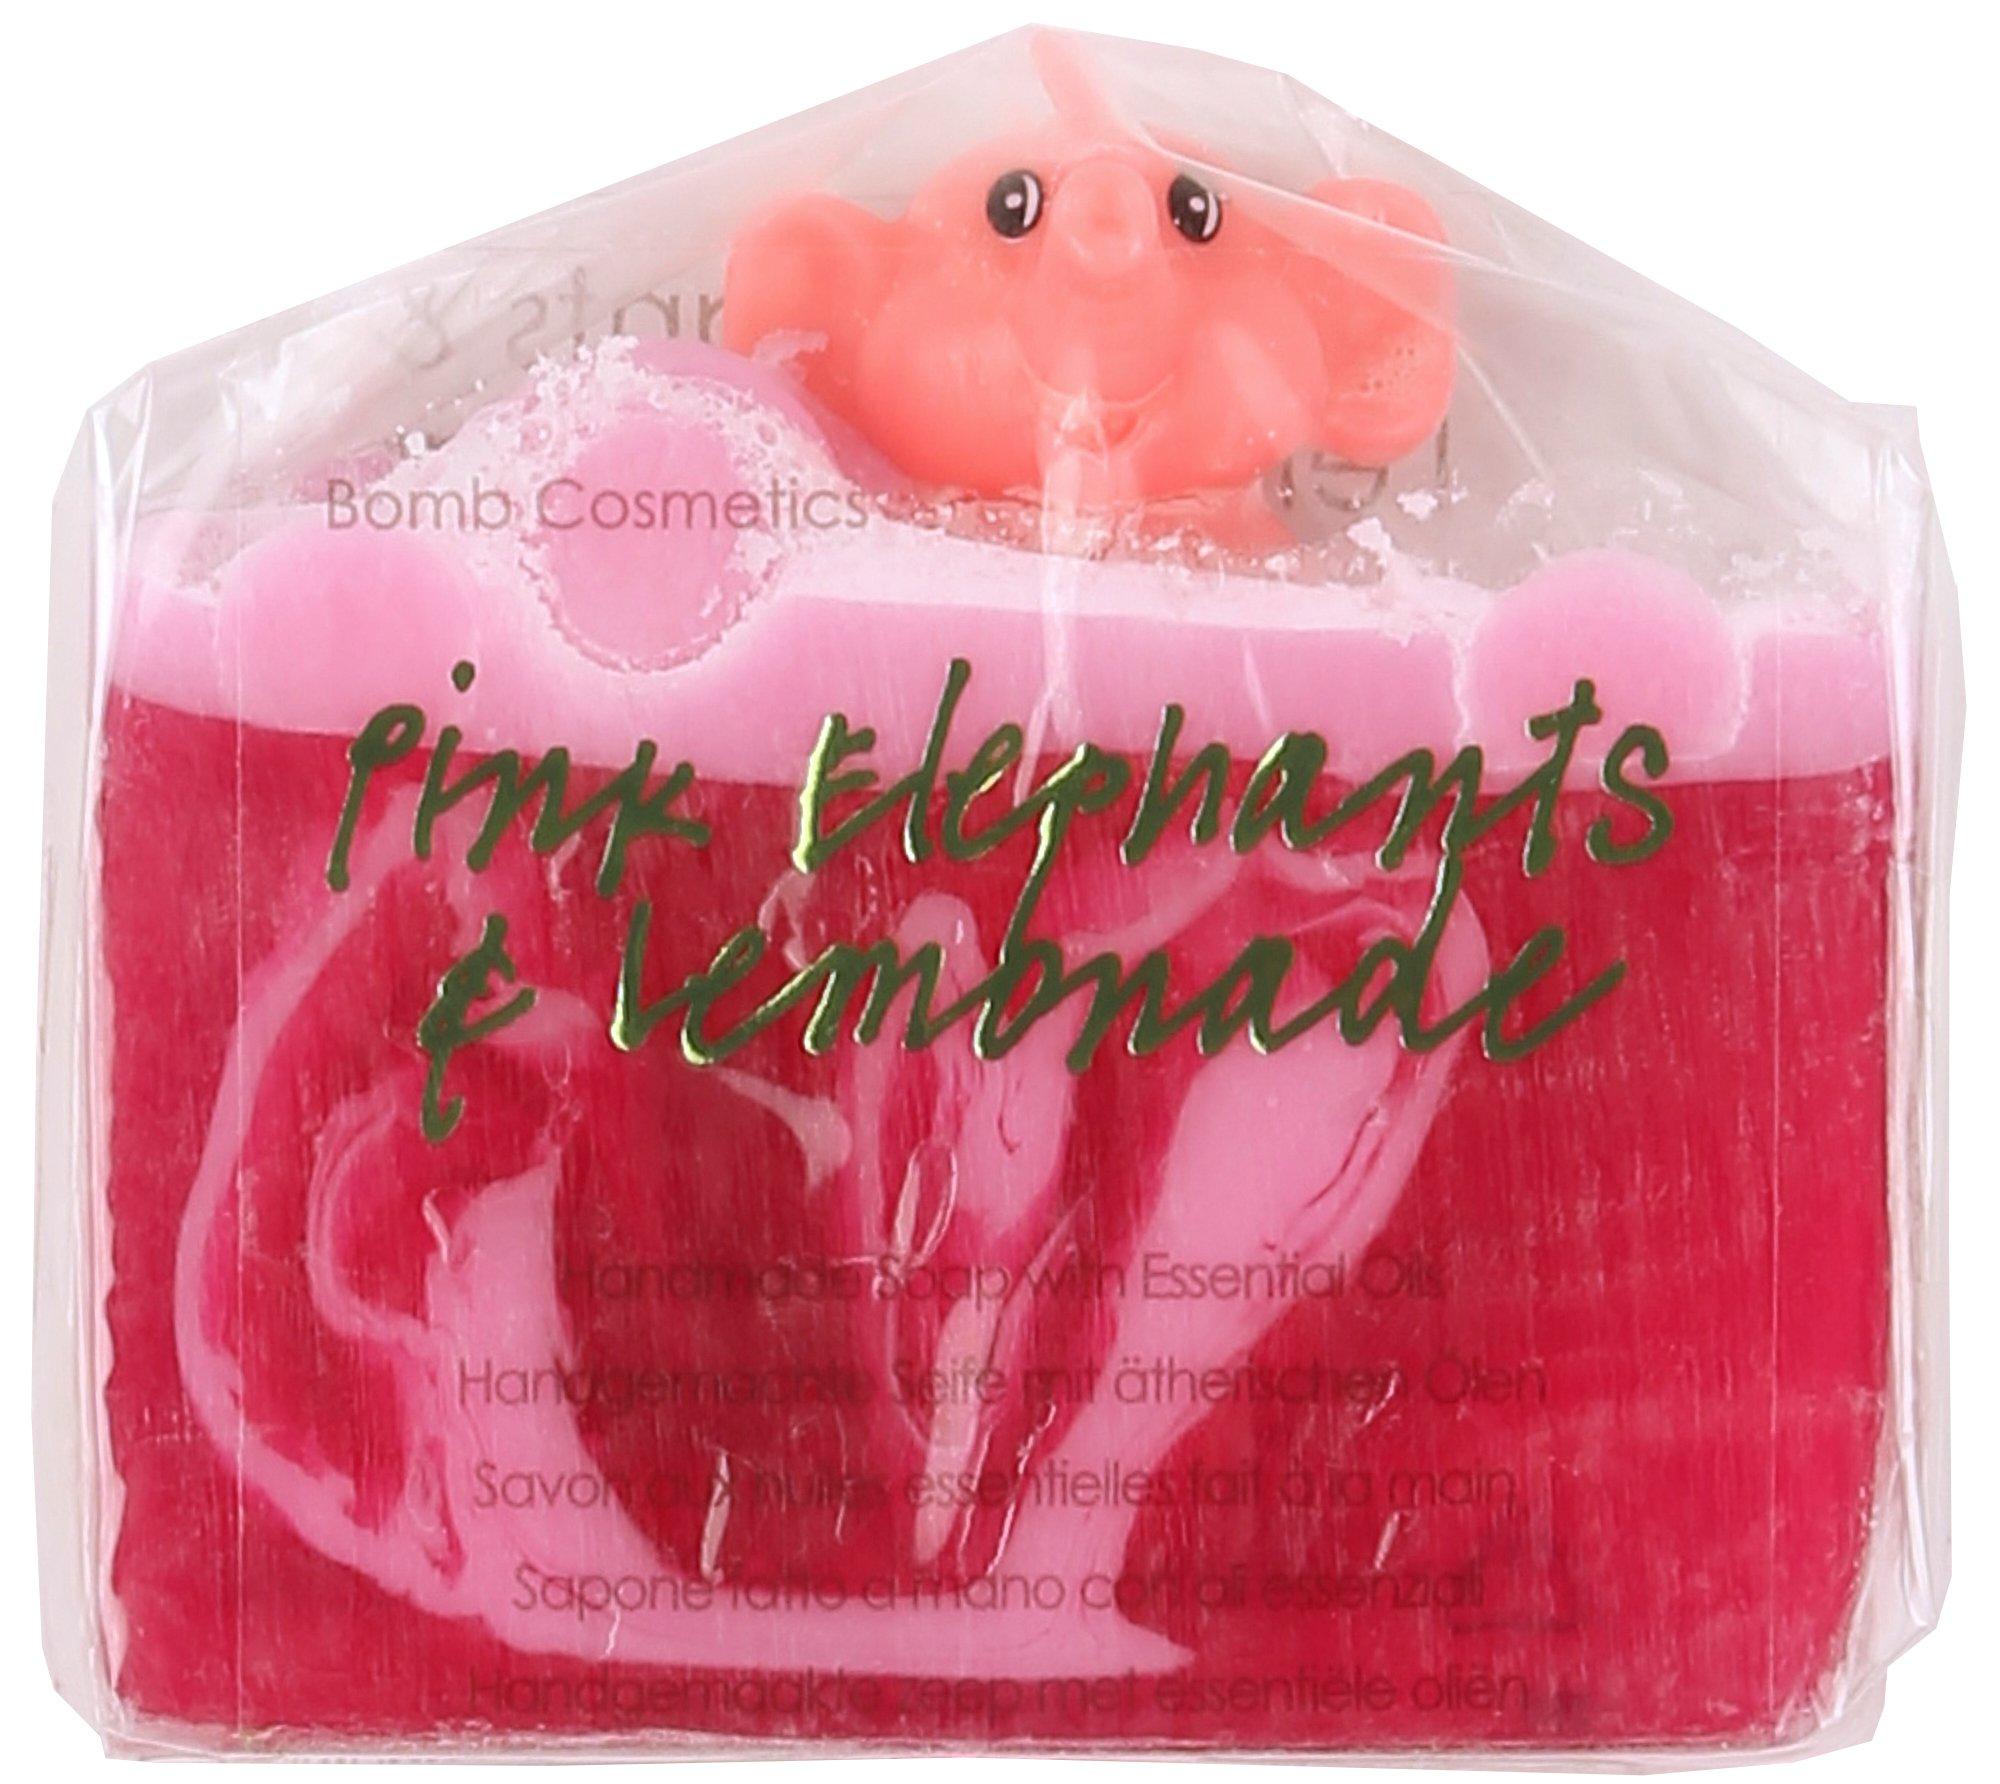 Bomb Cosmetics Pink Elephants & Lemonade Handmade Soap